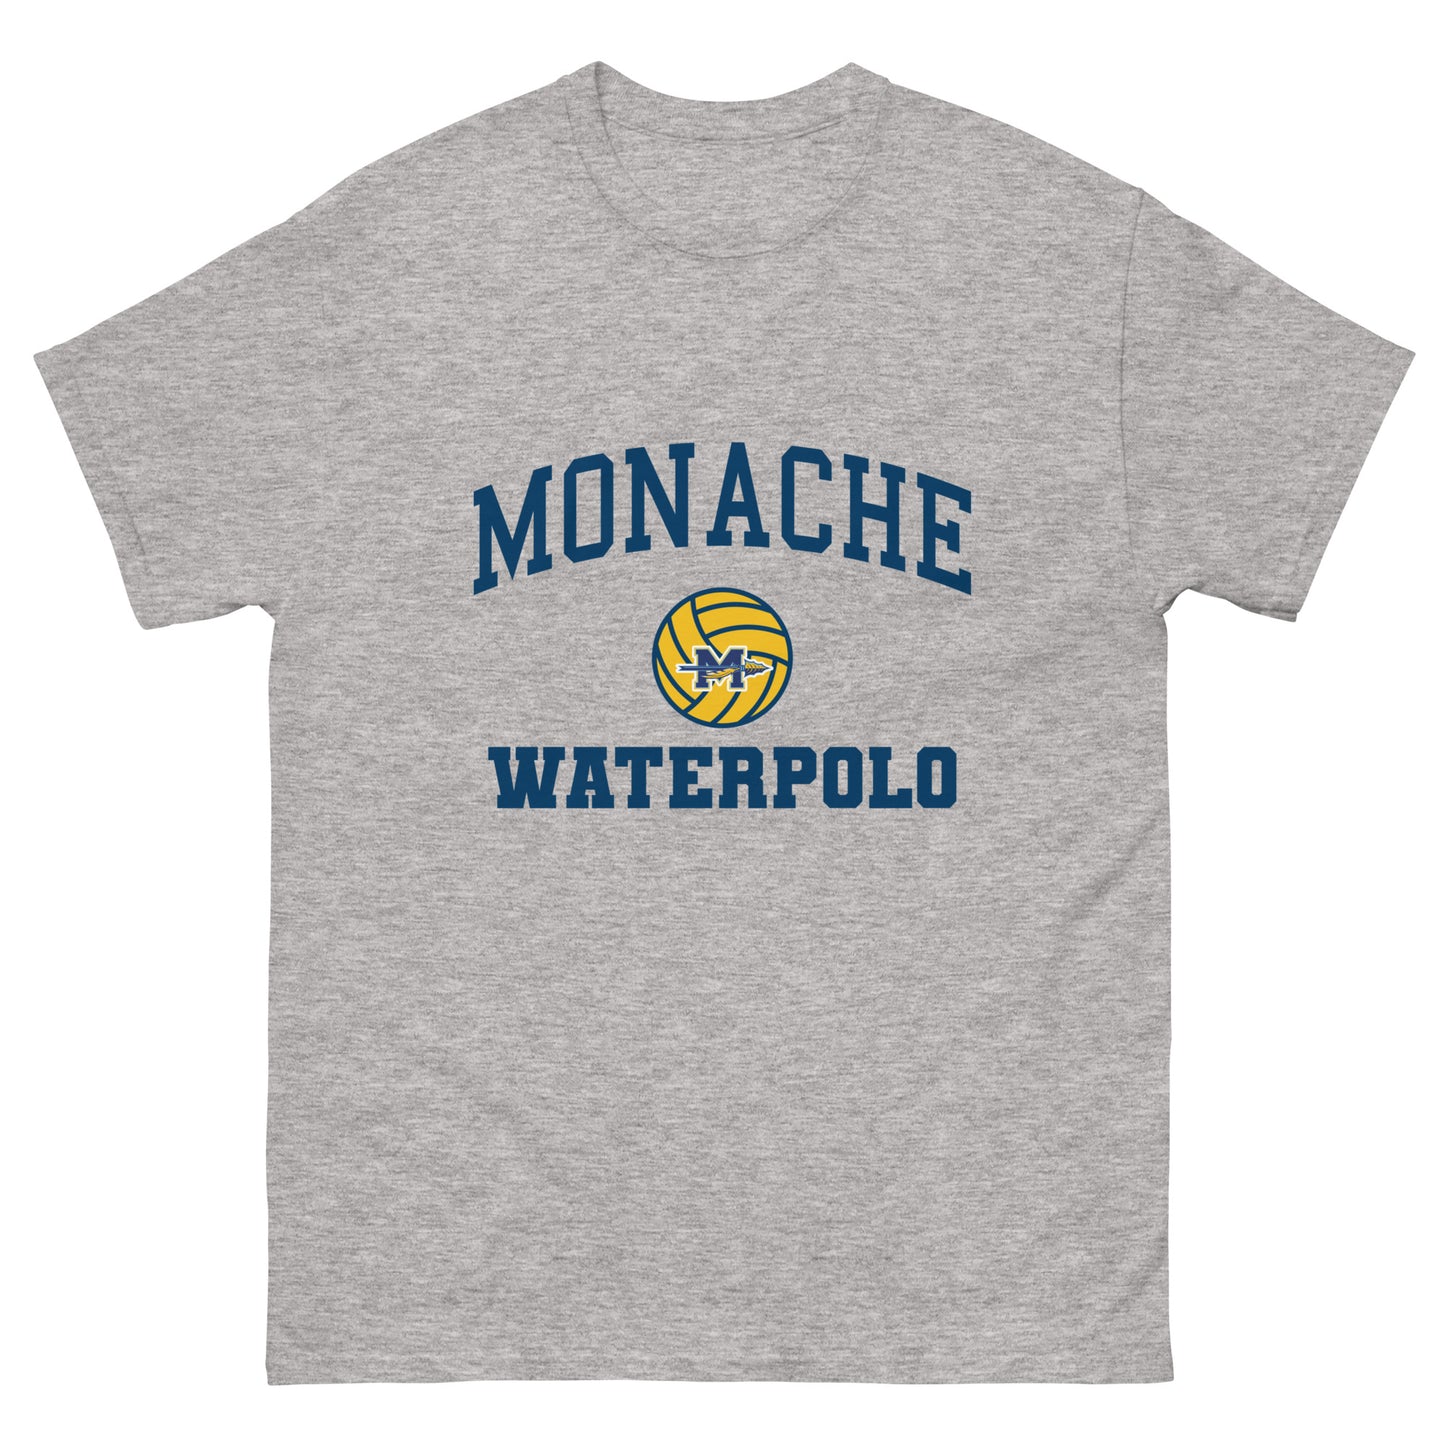 Monache Waterpolo classic tee